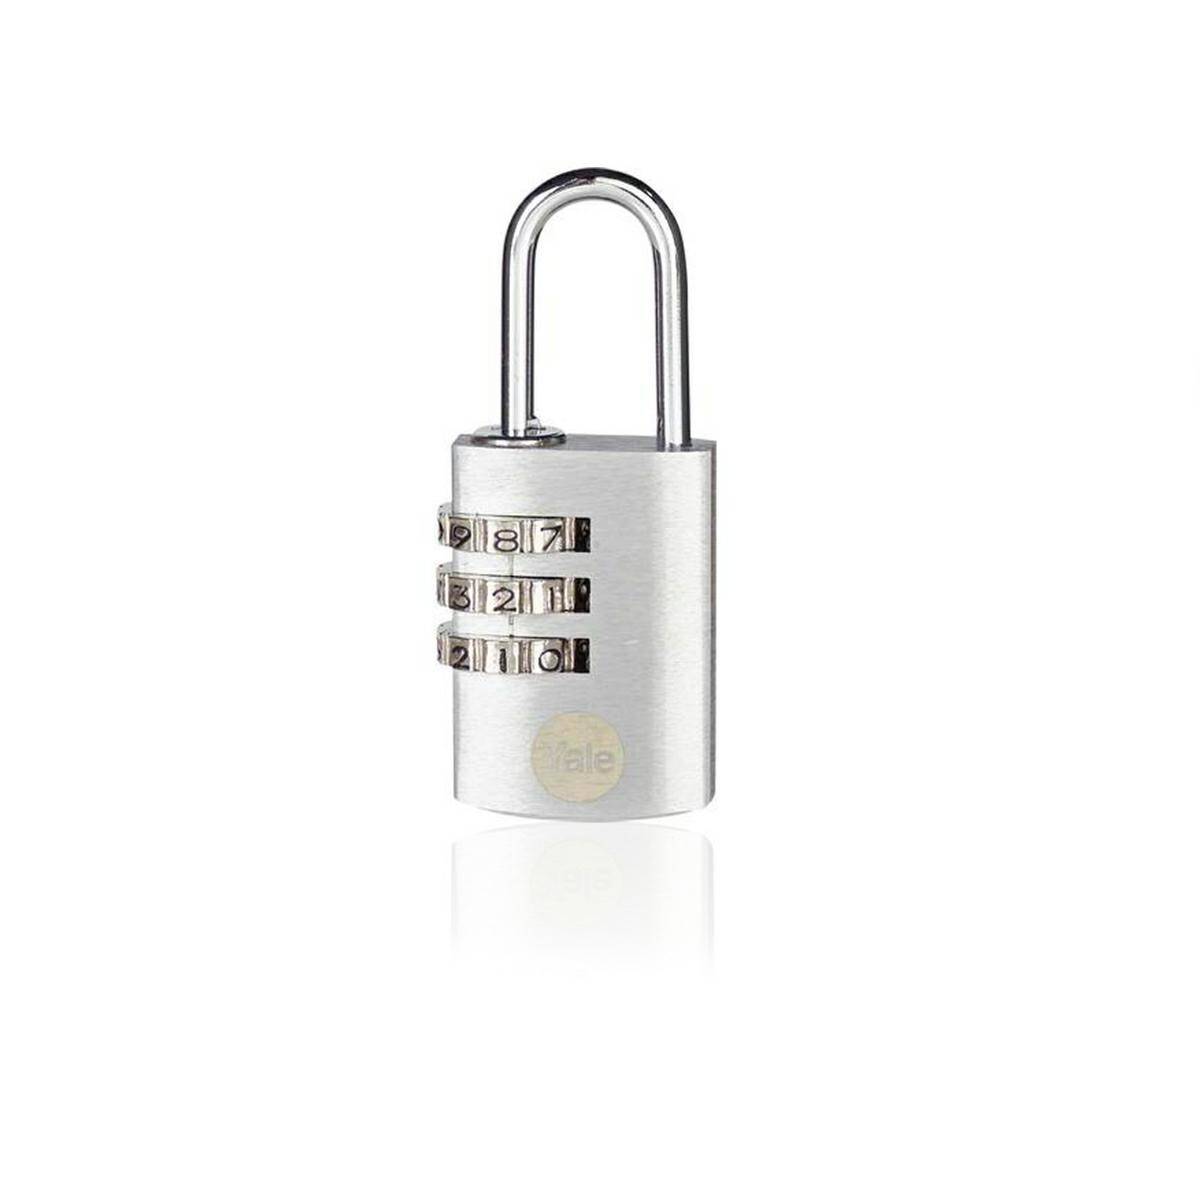 Cypher padlock Yale | brass - silver 23mm